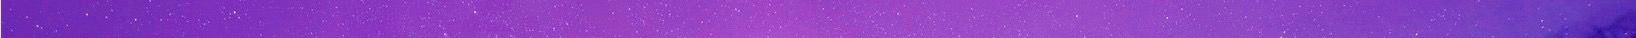 guy-in-black-aurora-blend-purple (1).jpg